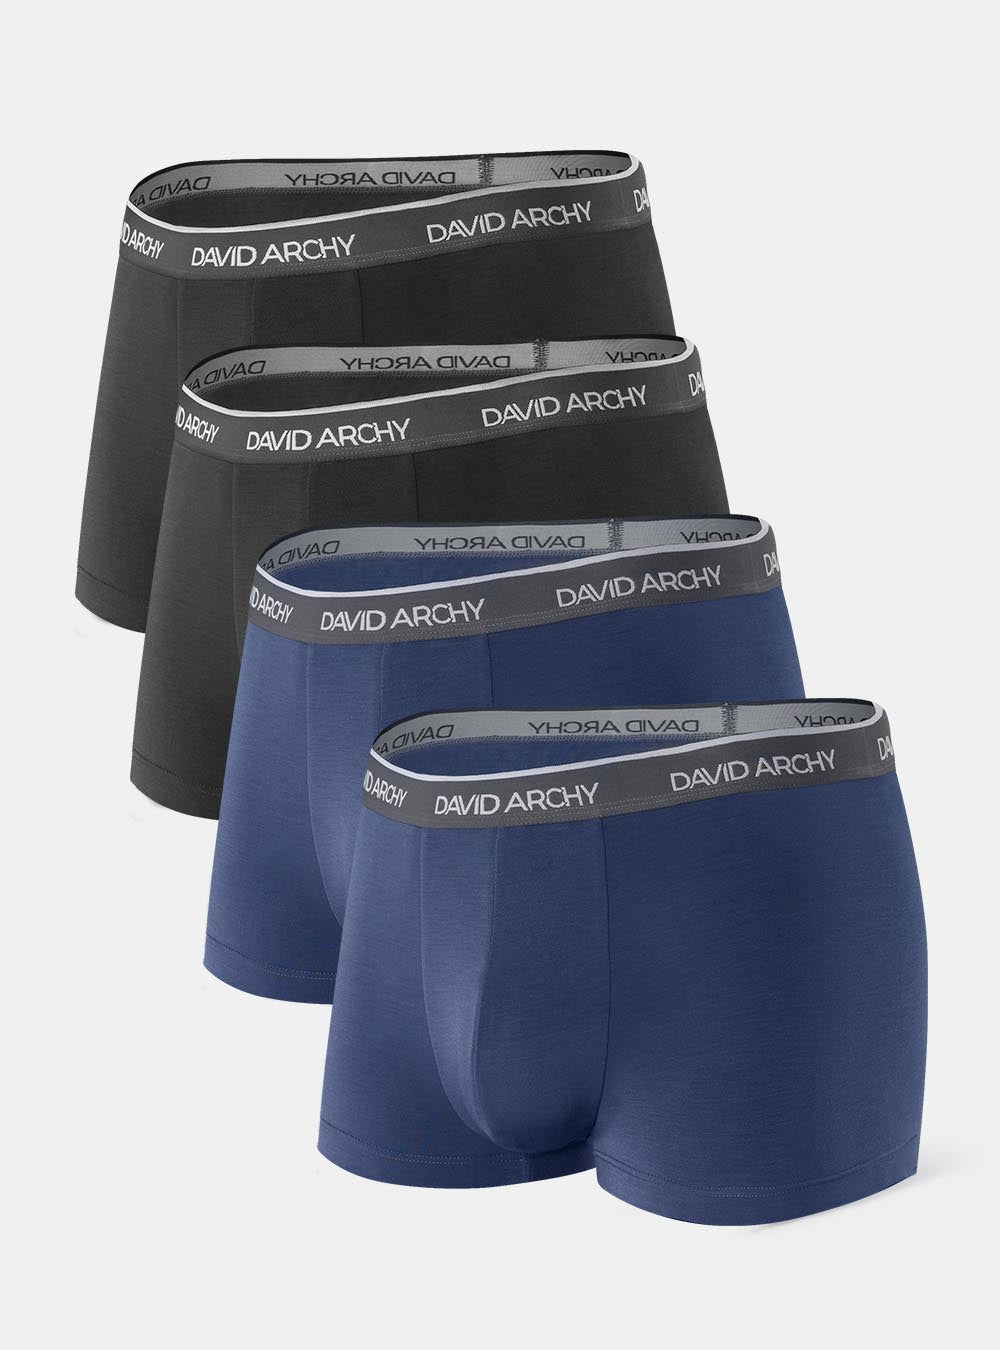 DAVID ARCHY Men's Underwear Ultra Soft Micro Modal Breathable